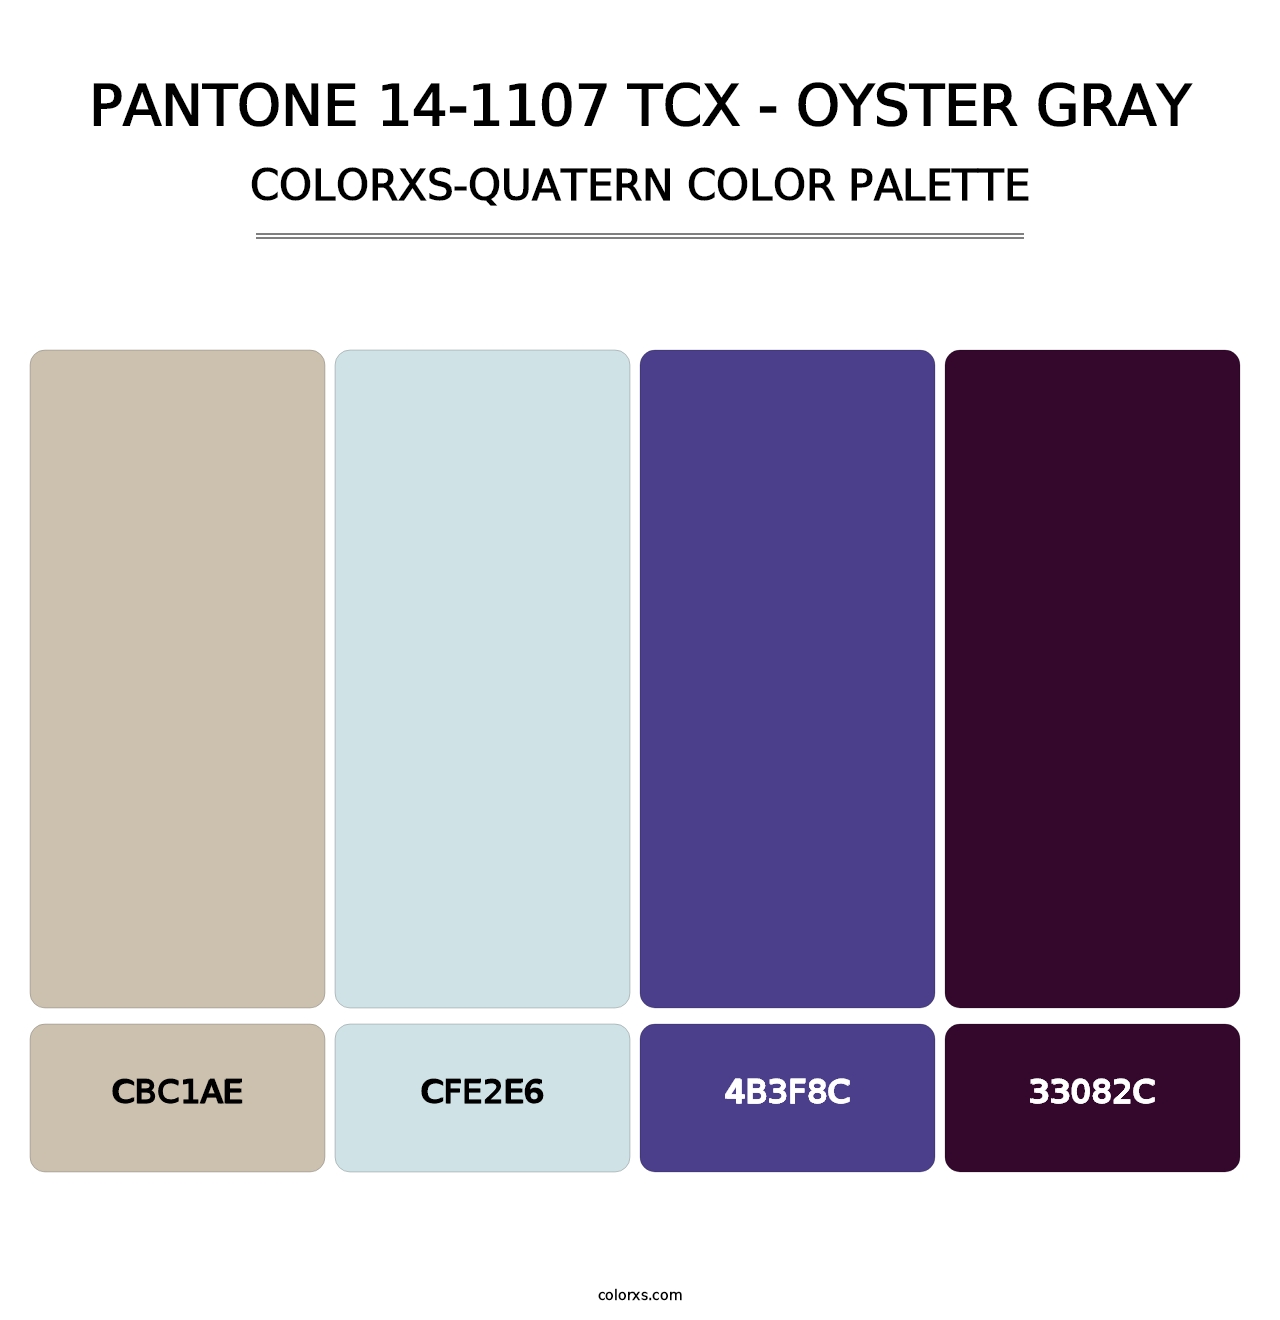 PANTONE 14-1107 TCX - Oyster Gray - Colorxs Quatern Palette